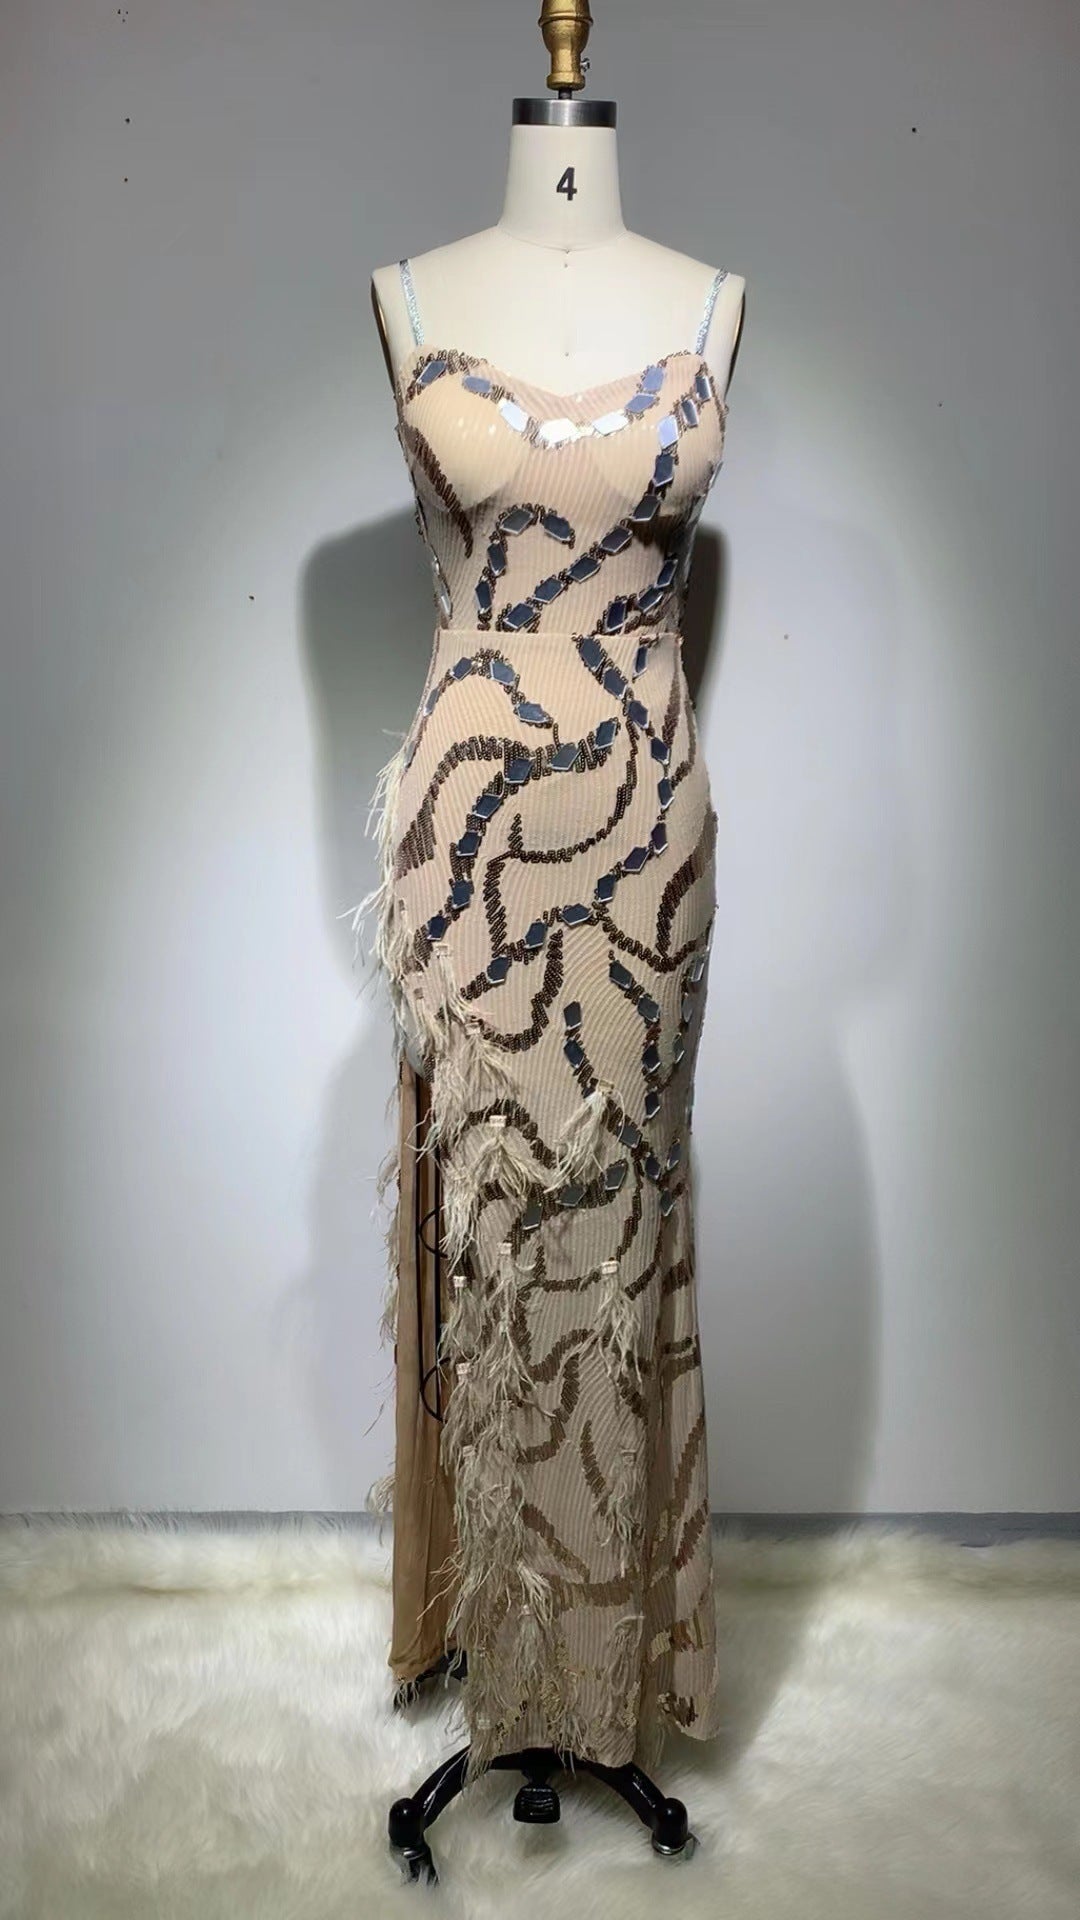 Backless Elegant Sequined Tight Split Feather Dress